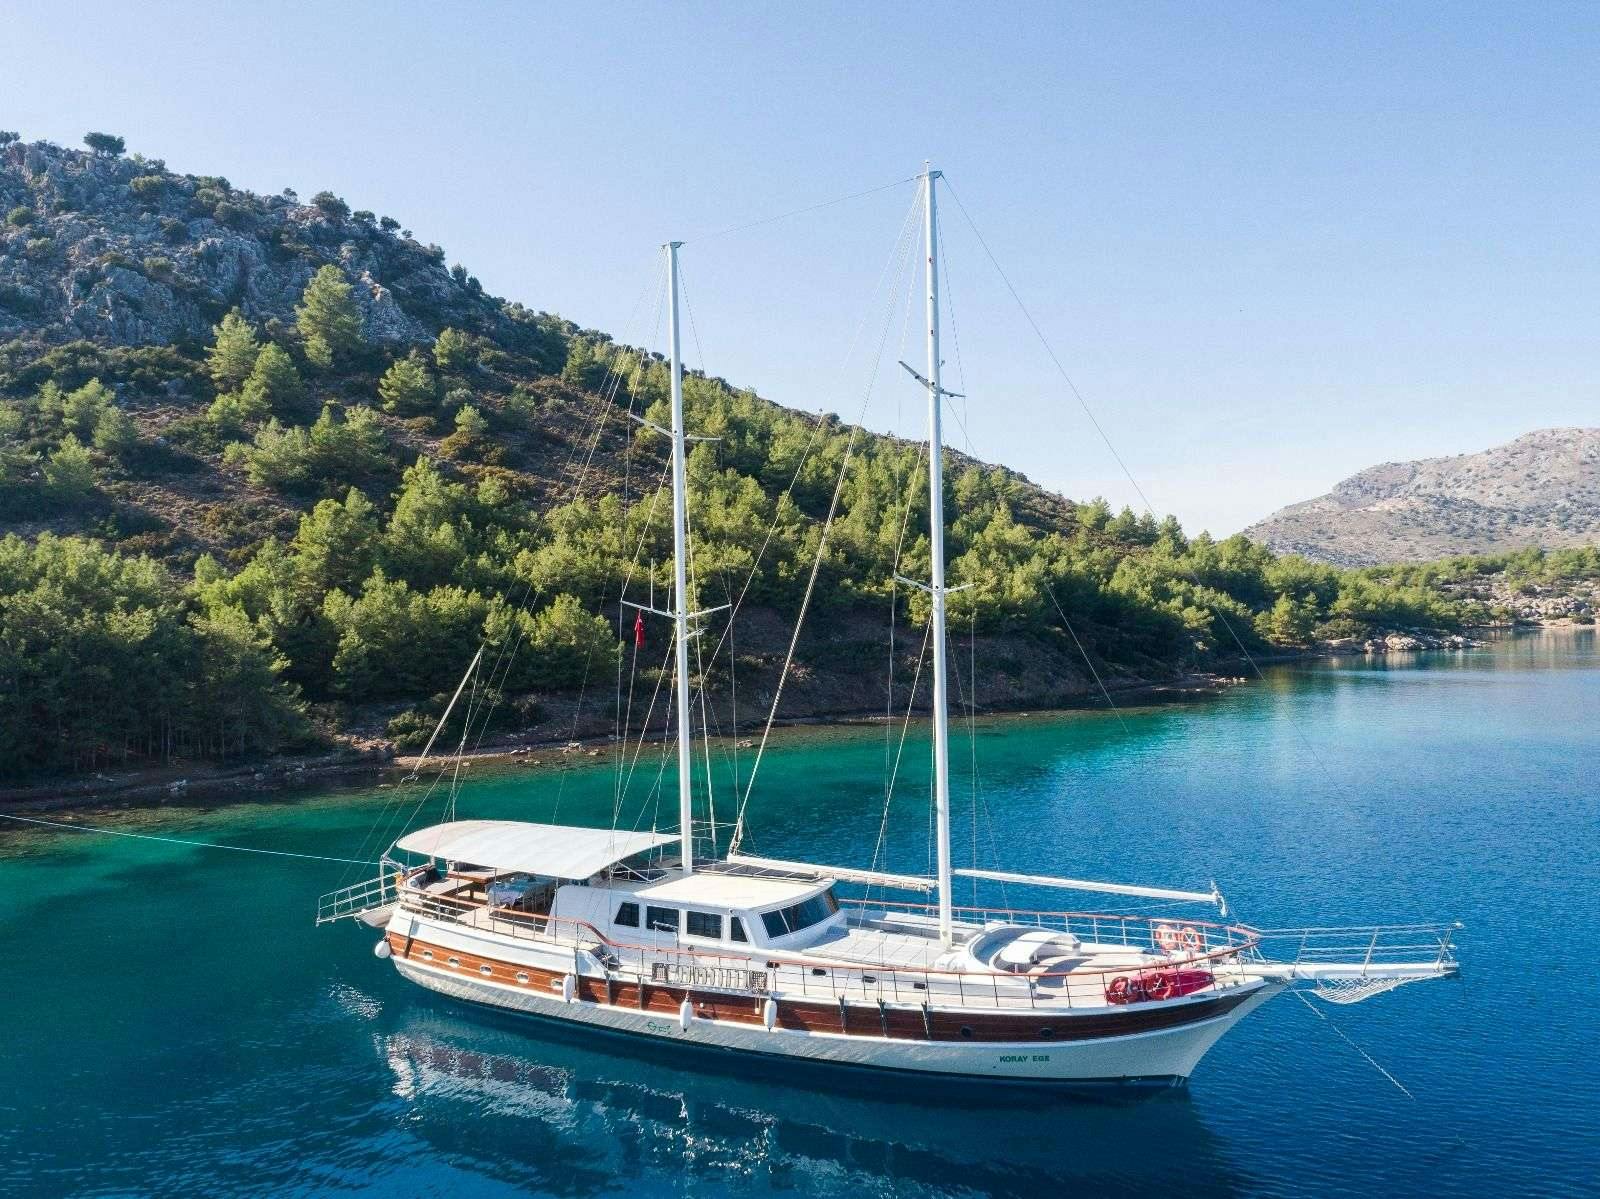 koray ege - Yacht Charter Fethiye & Boat hire in Greece & Turkey 1